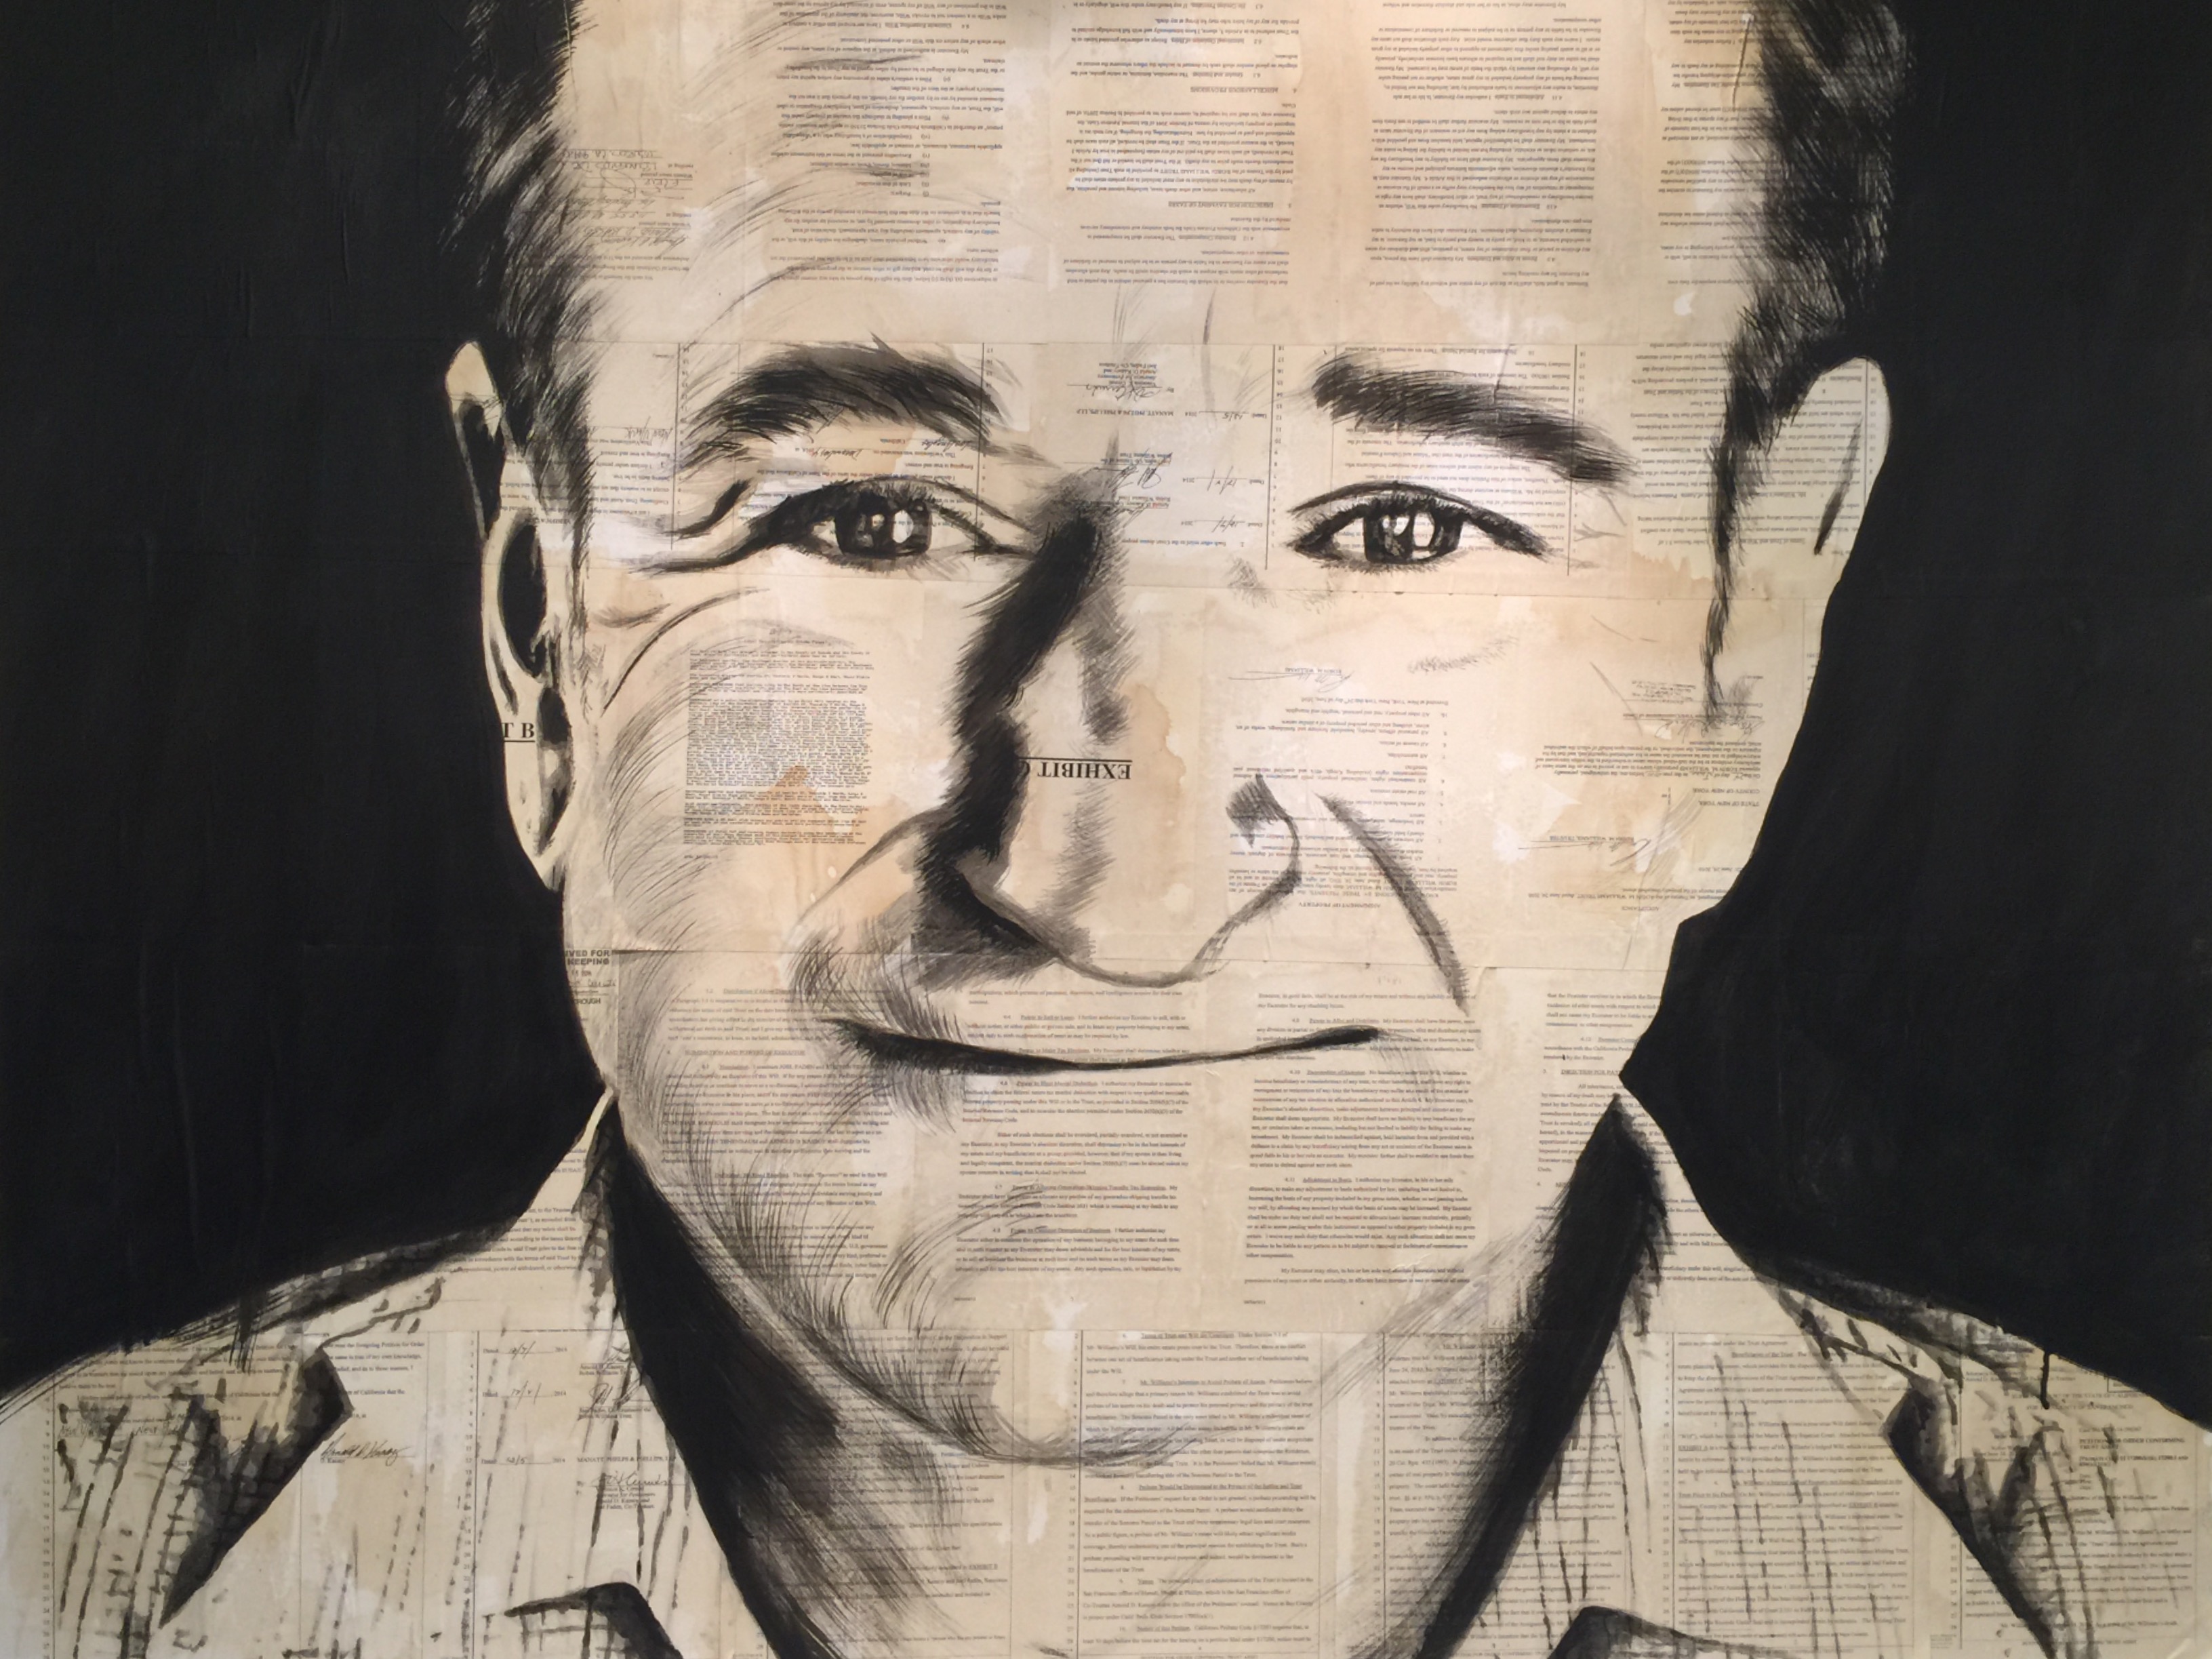 Exhibit 14: Robin Williams